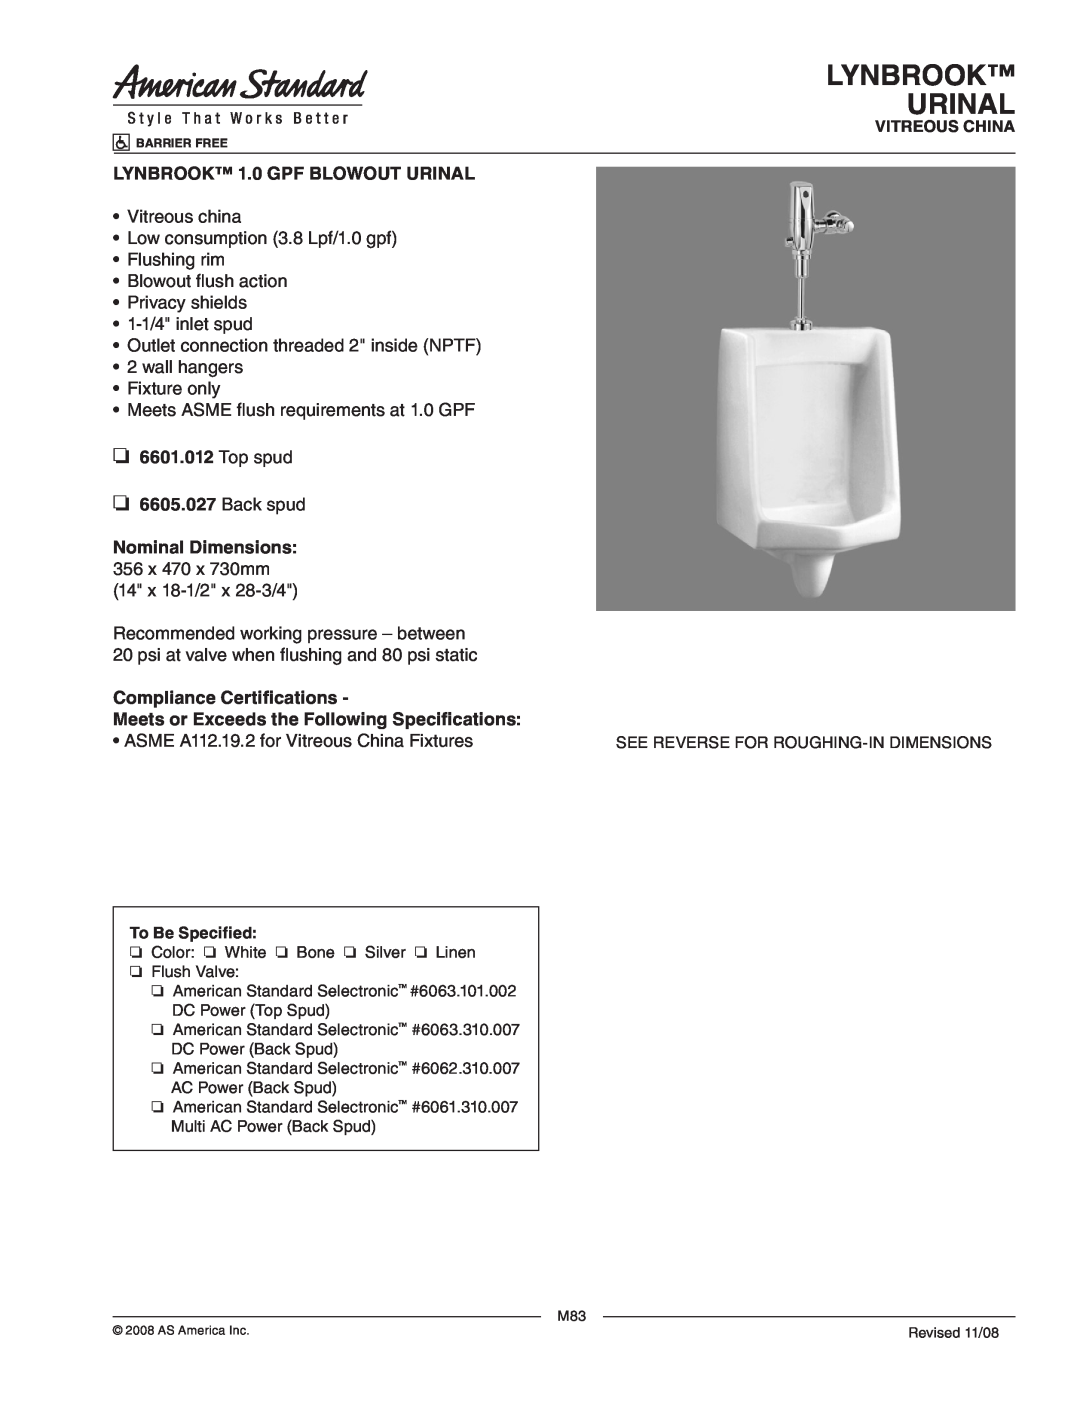 American Standard 6605.027, 6601.012 dimensions Lynbrook Urinal, LYNBROOK 1.0 GPF BLOWOUT URINAL, Top spud, Back spud 